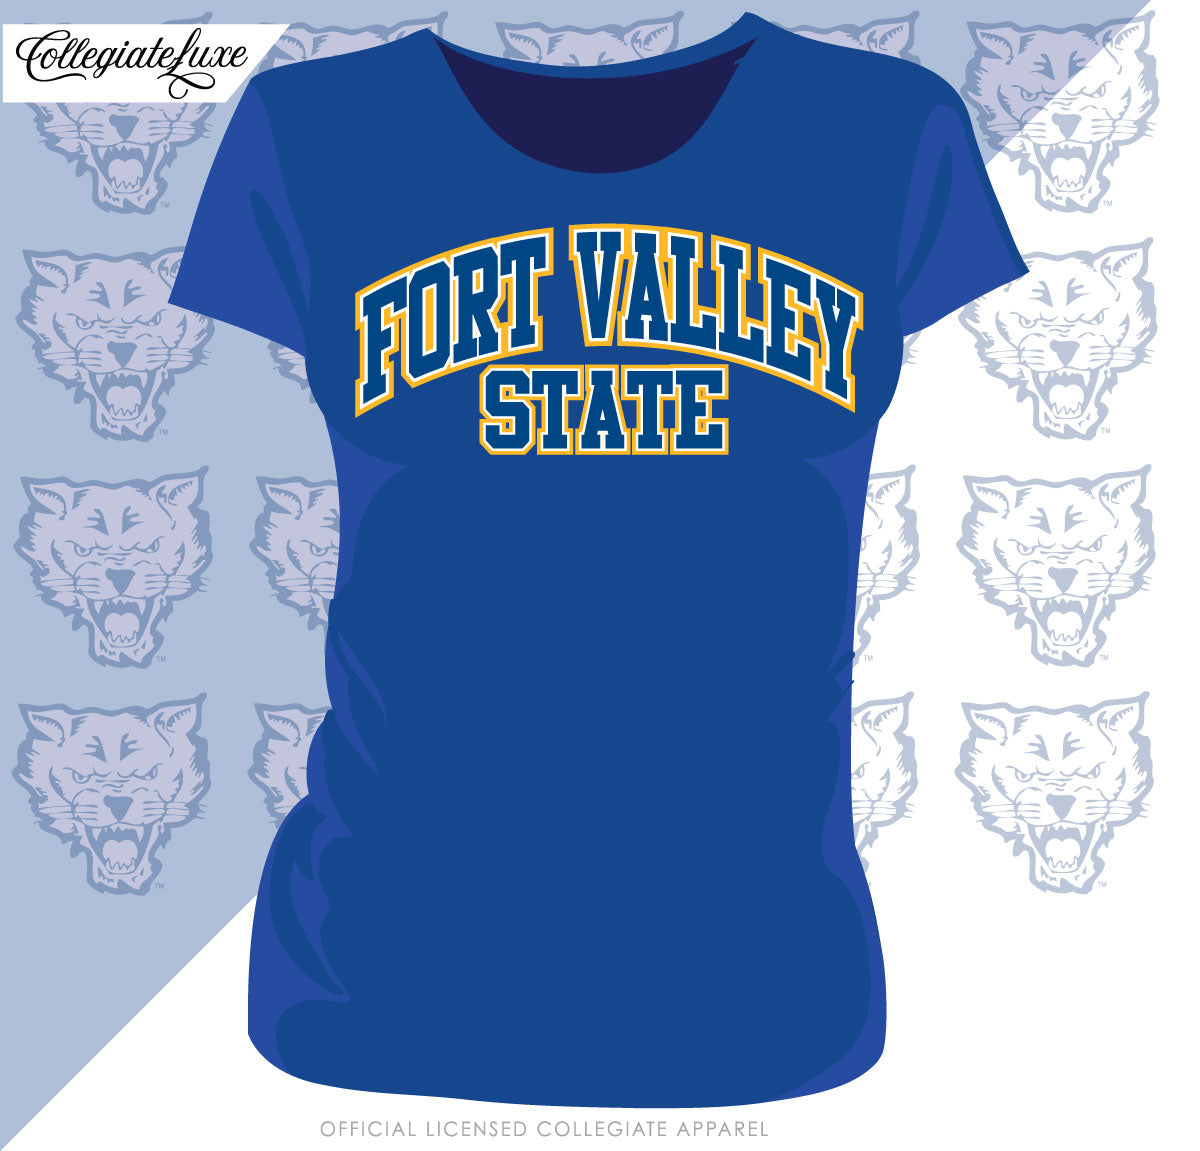 Fort Valley State – collegiateluxe